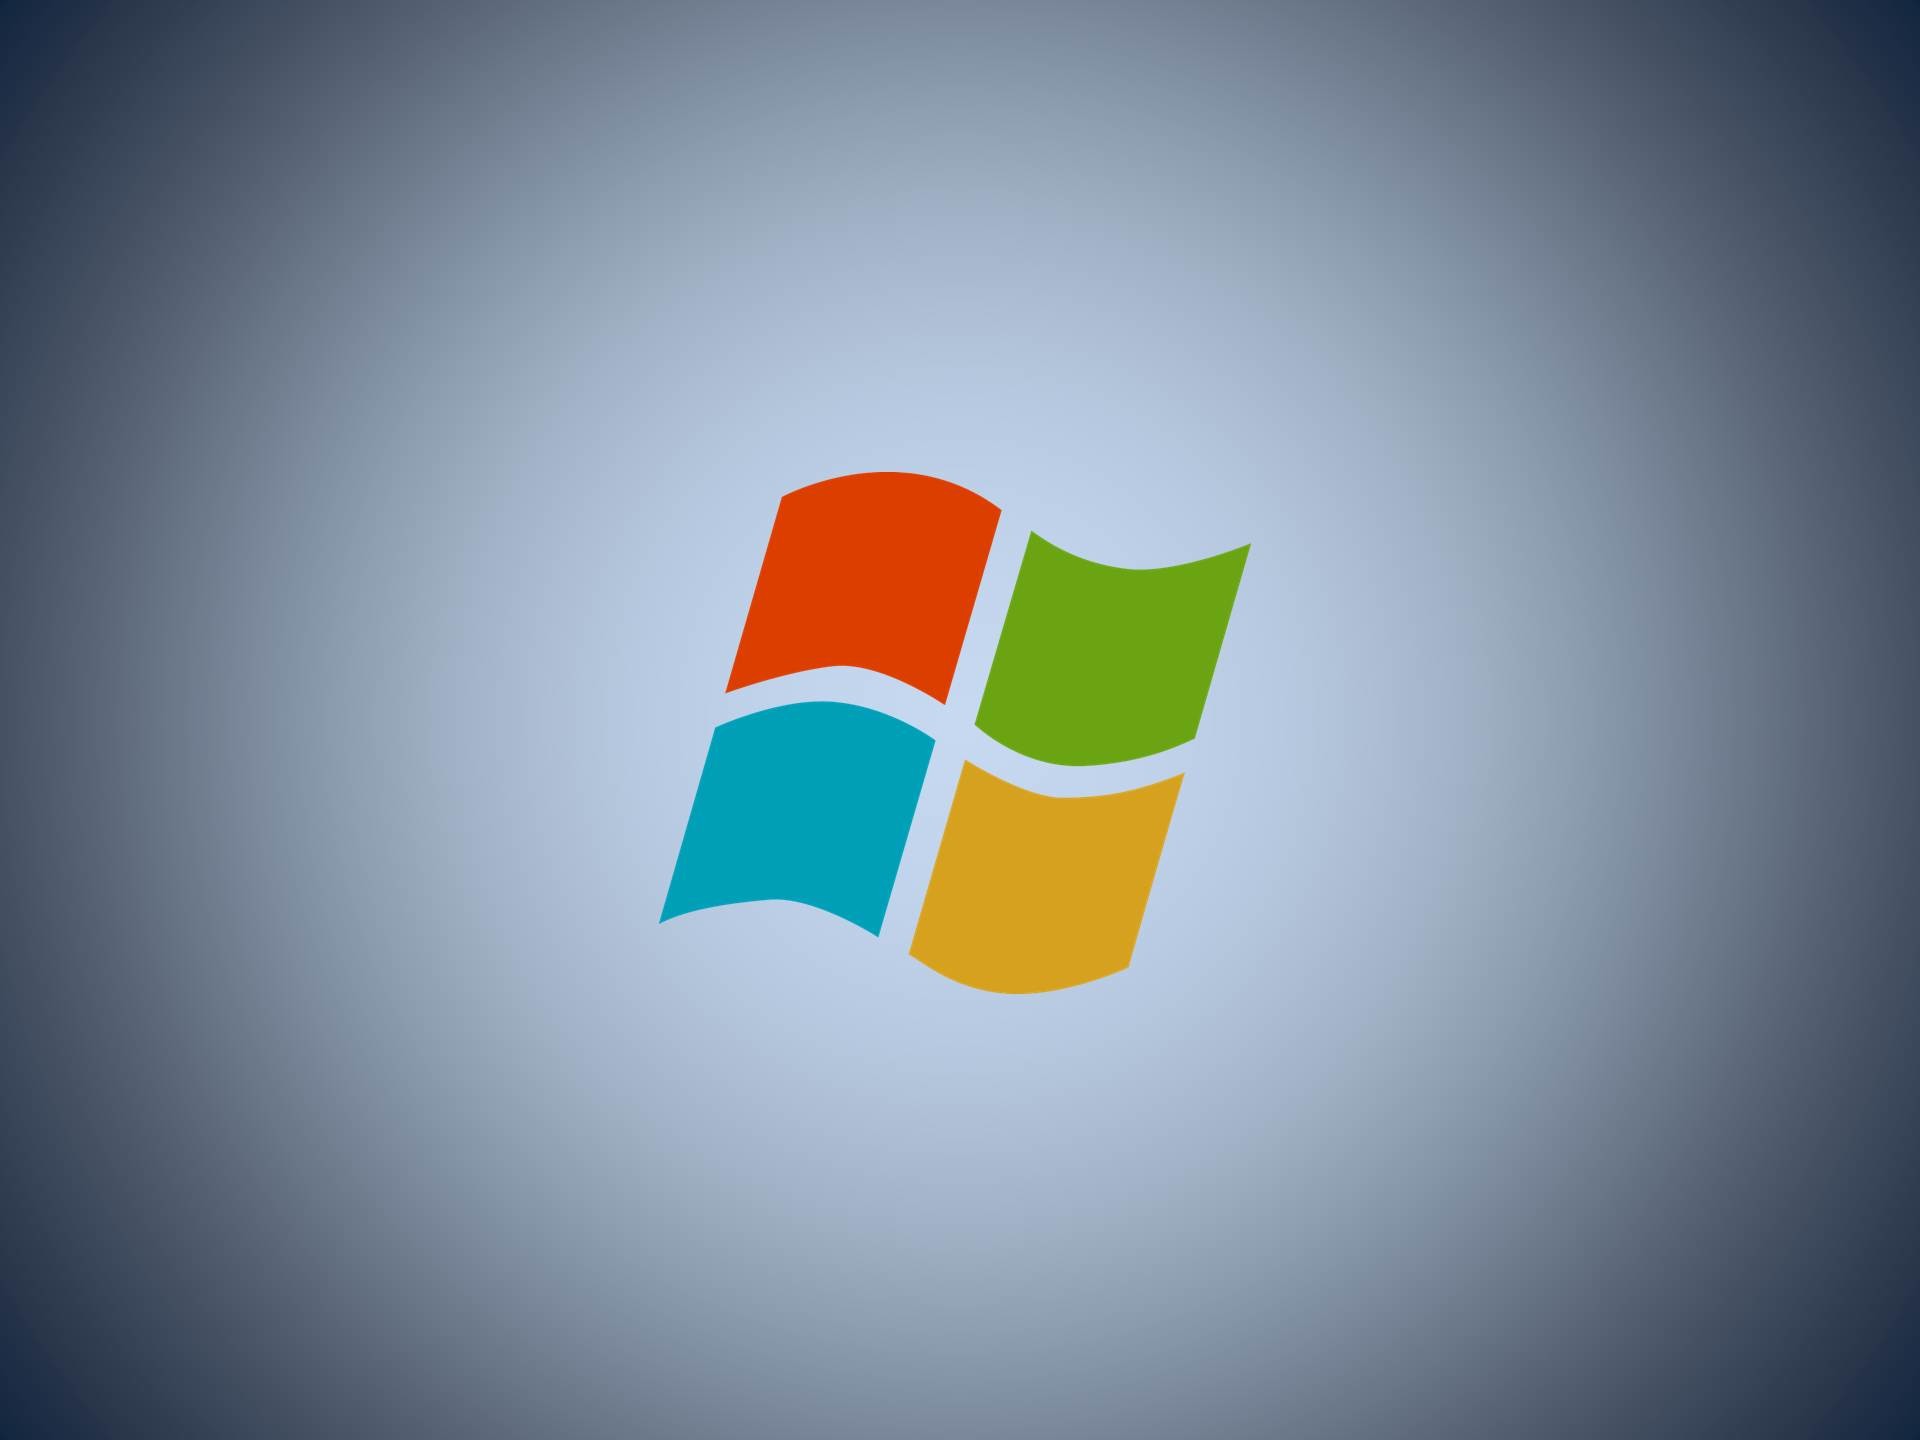 1920x1440 Windows 8 metro wallpaper pack by jpaulcruz98 on DeviantArt